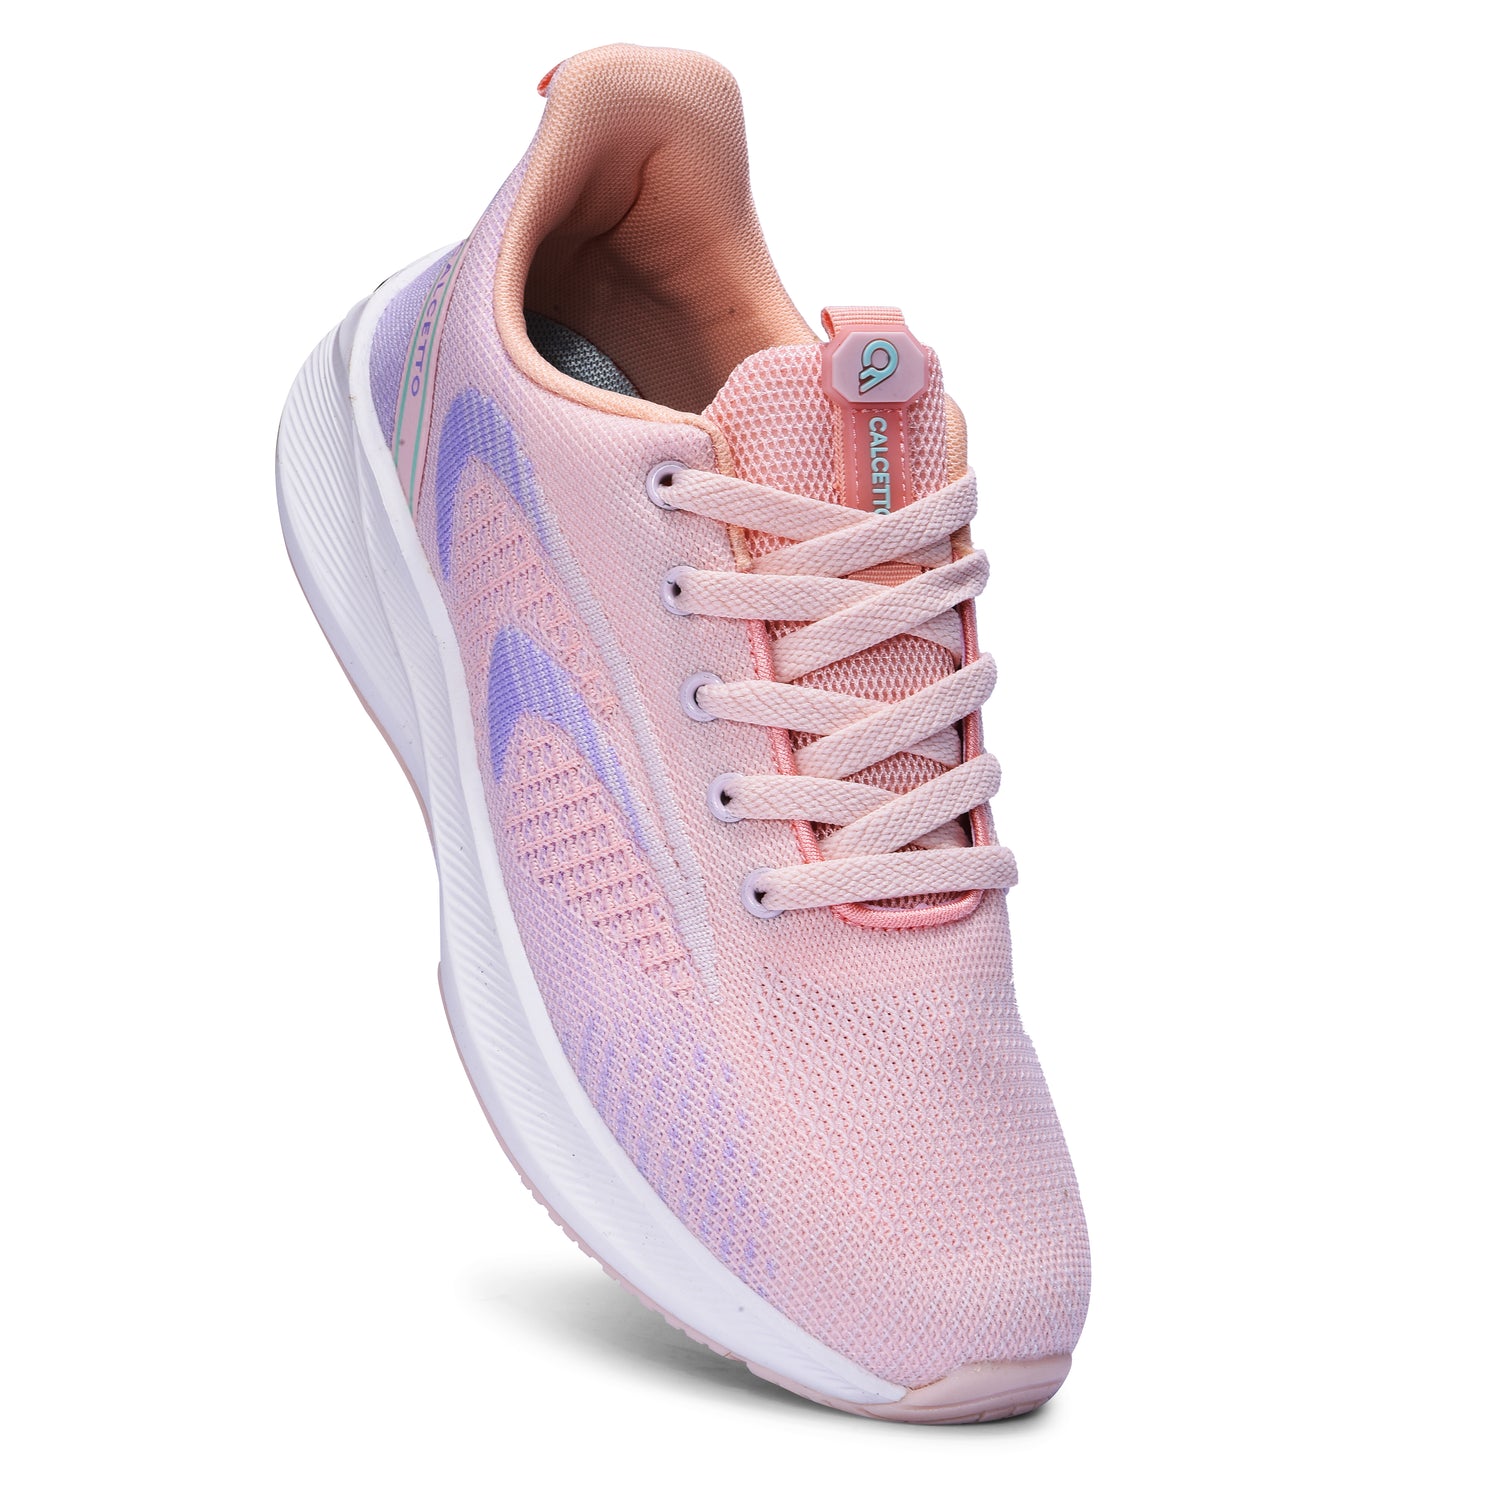 Calcetto CLT-9823 Peach Running Sports Shoe For Women